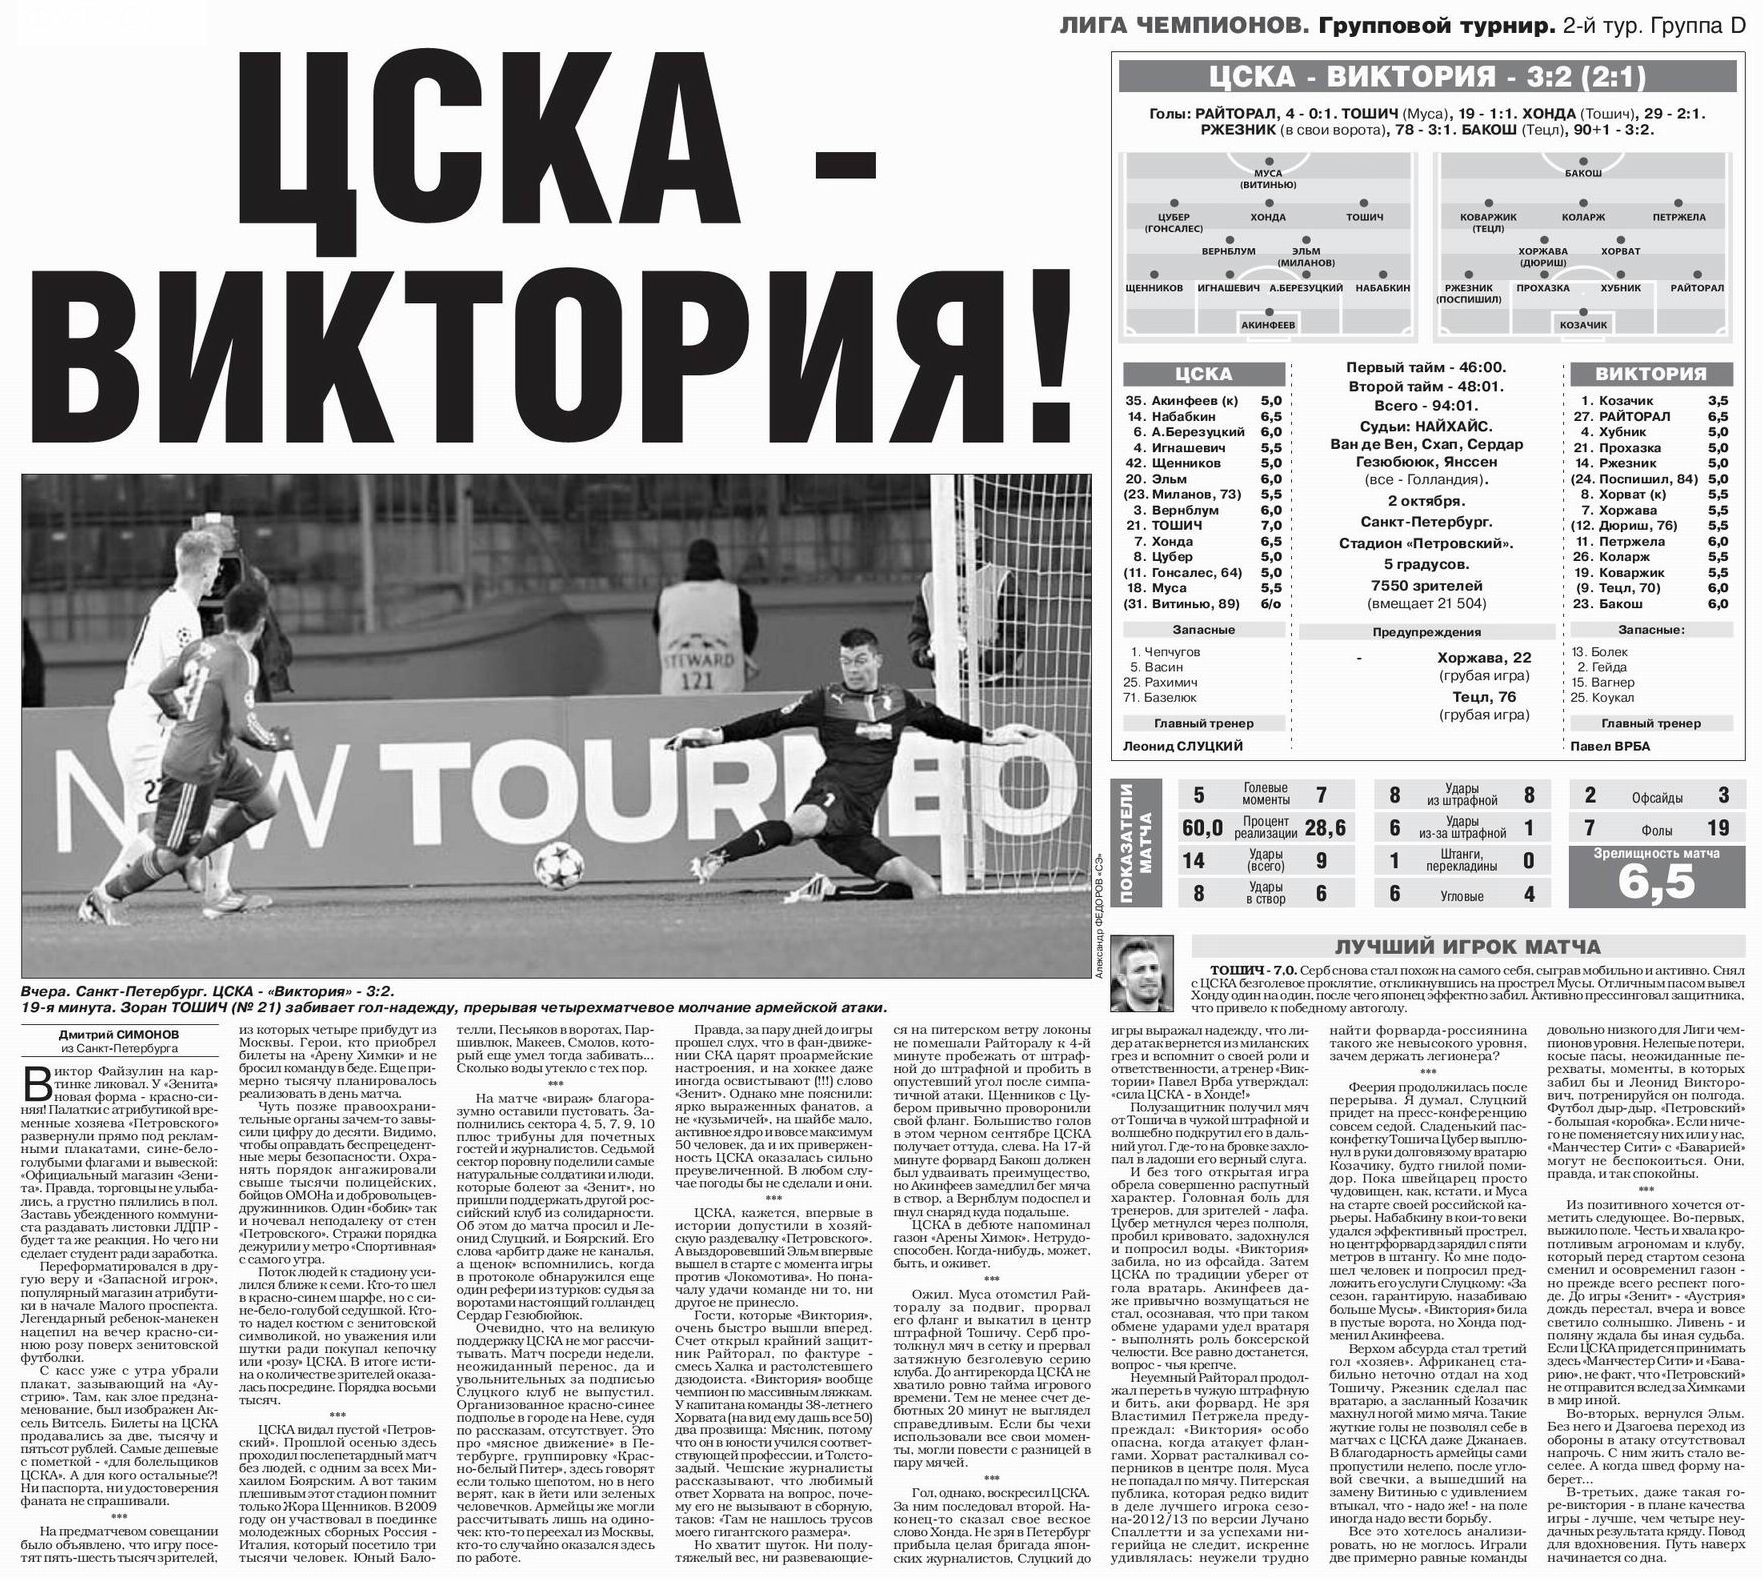 2013-10-02.CSKA-Viktoria